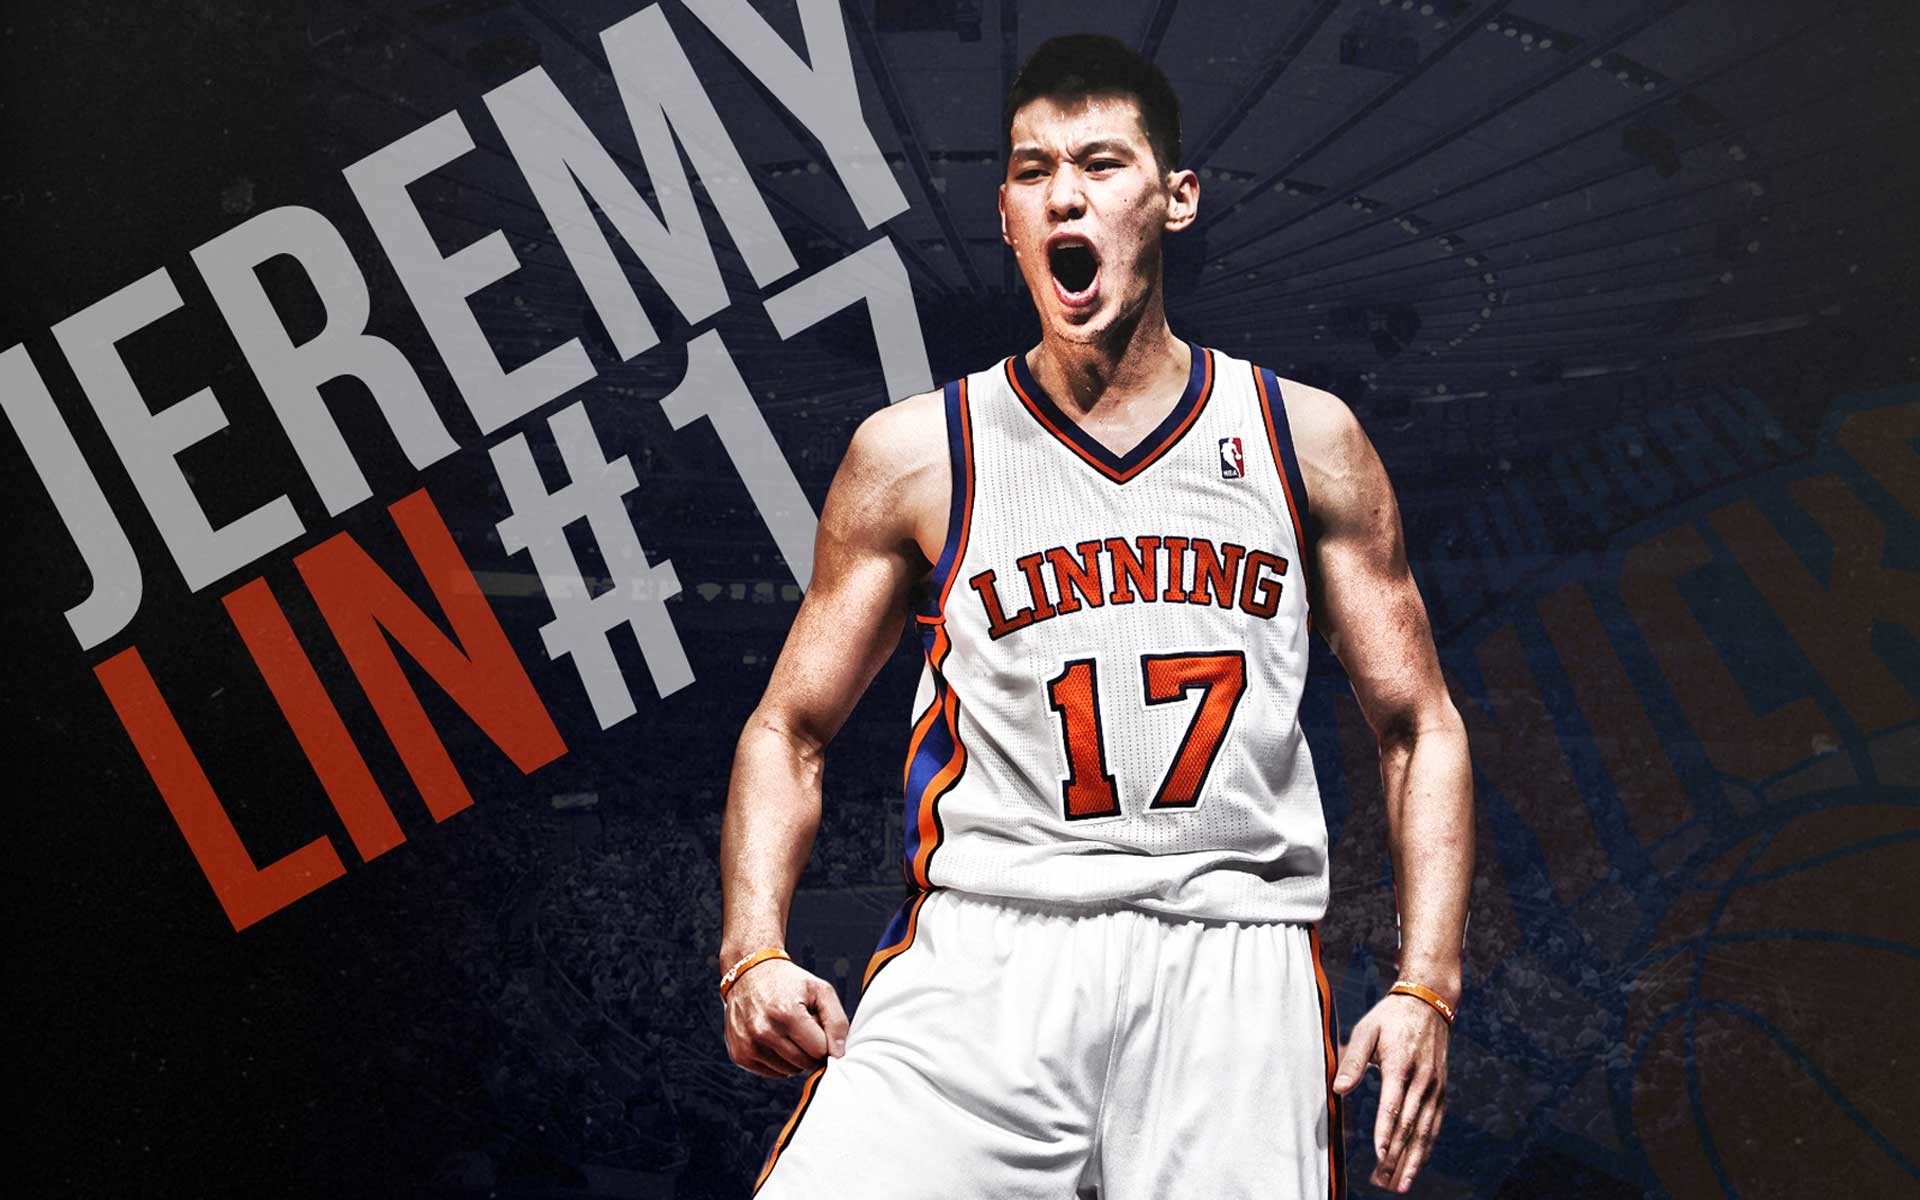 1920x1200 Jeremy Lin Desktop Wallpaper - New York Knicks Player, Crazy in Basketball!